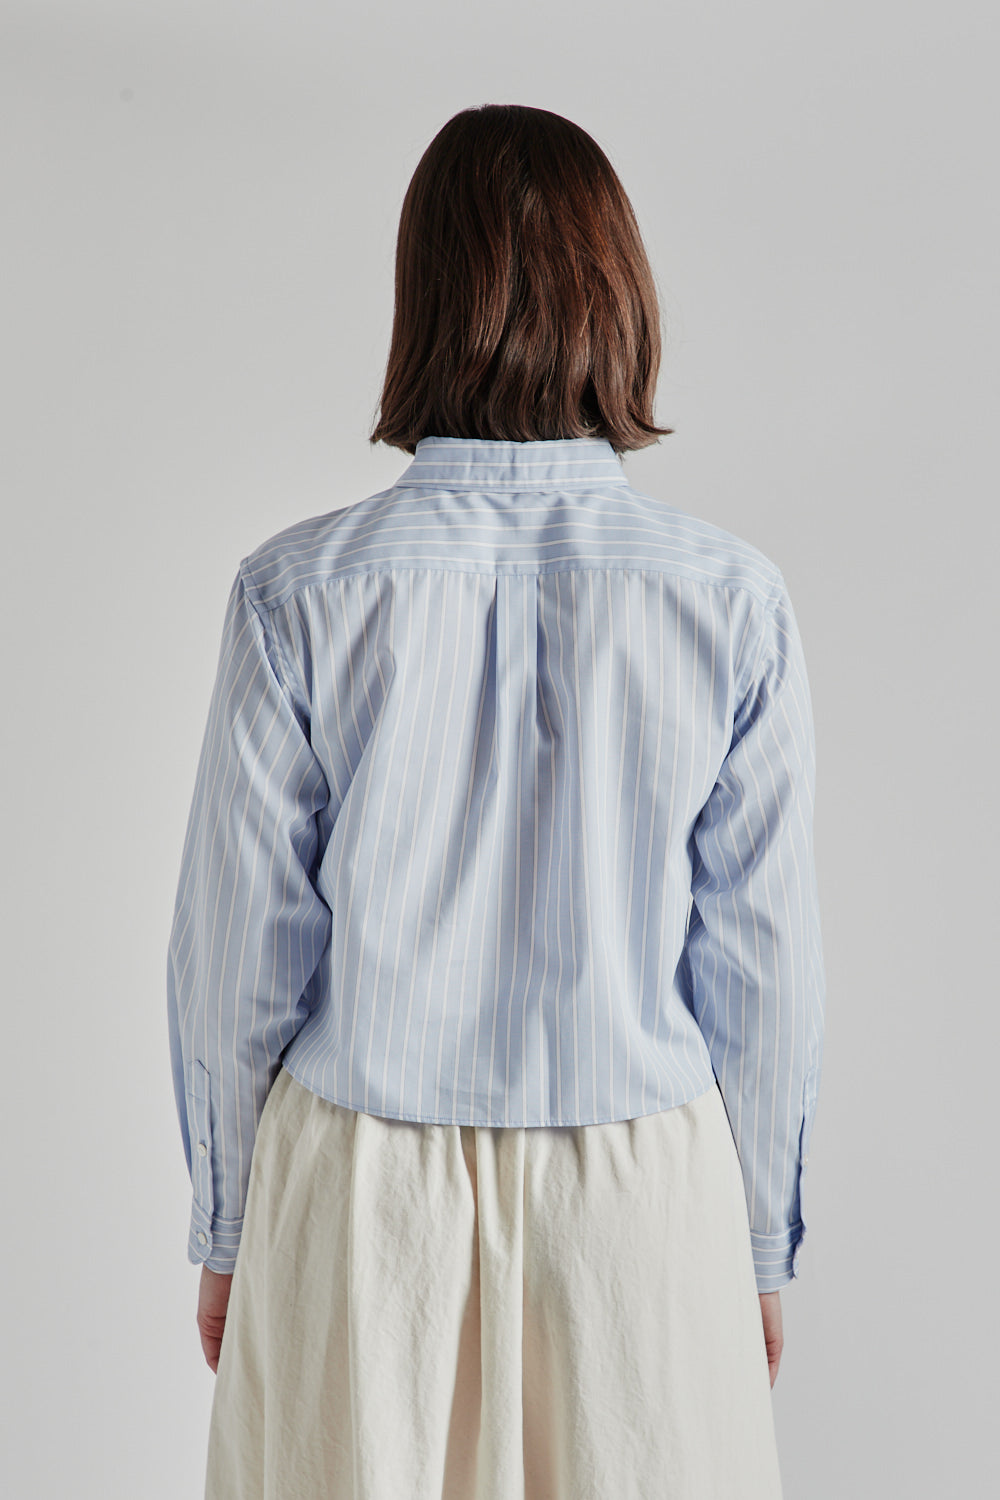 Blurhms Stripe Short Shirt in Saxe/White